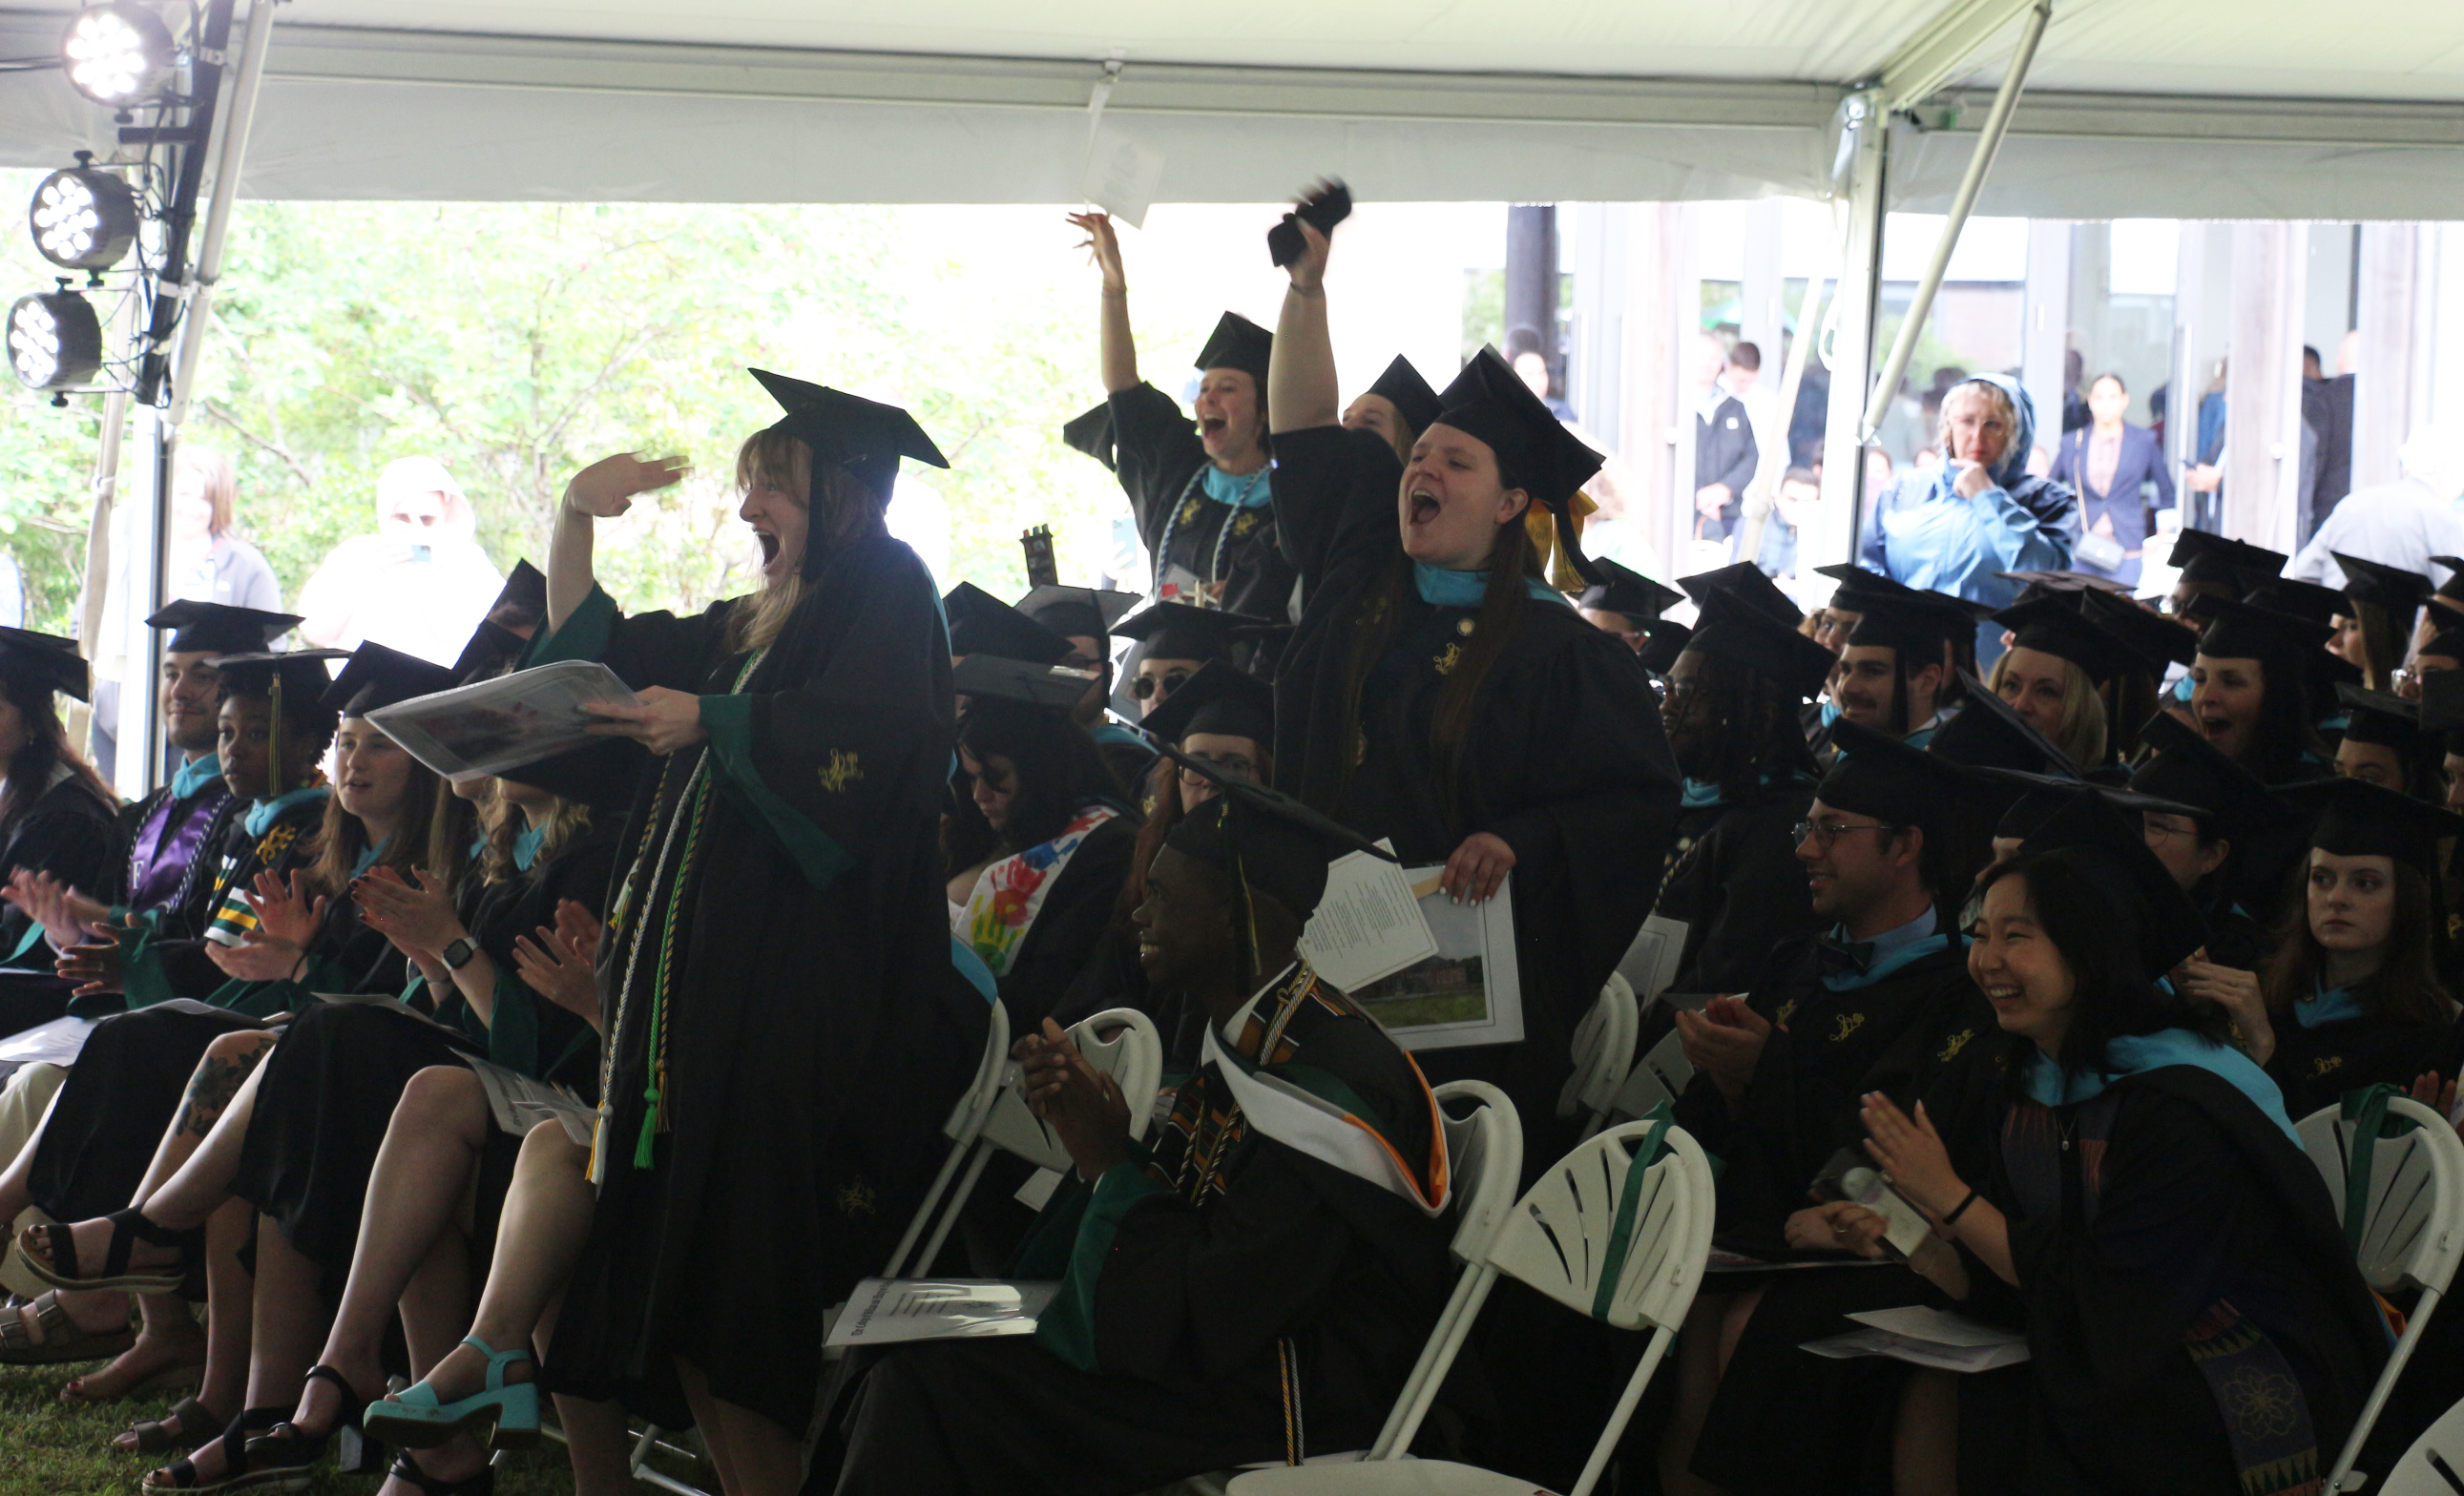 Graduates Cheering During the Ceremony